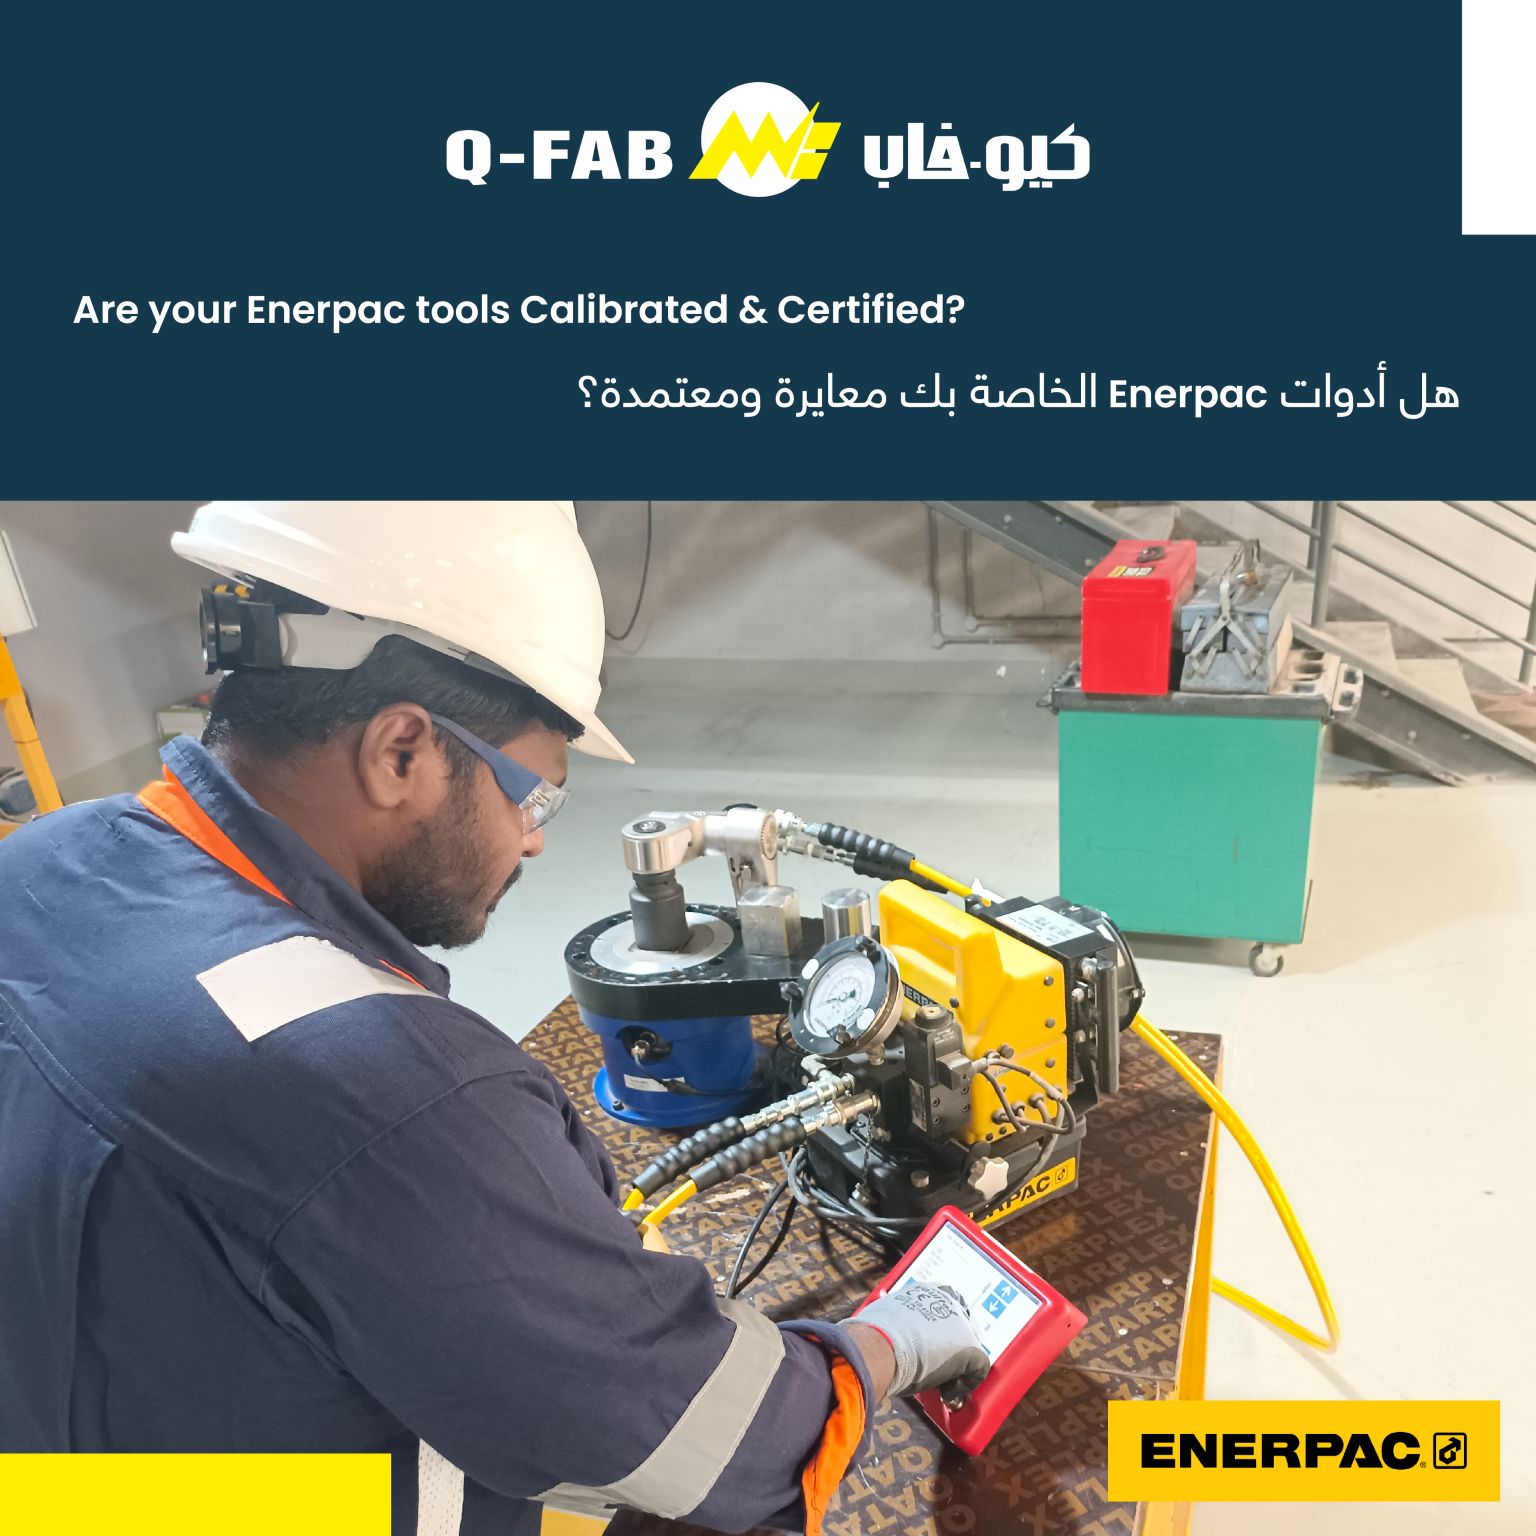 Q-Fab’s Authorized Enerpac Service Center, Qatar